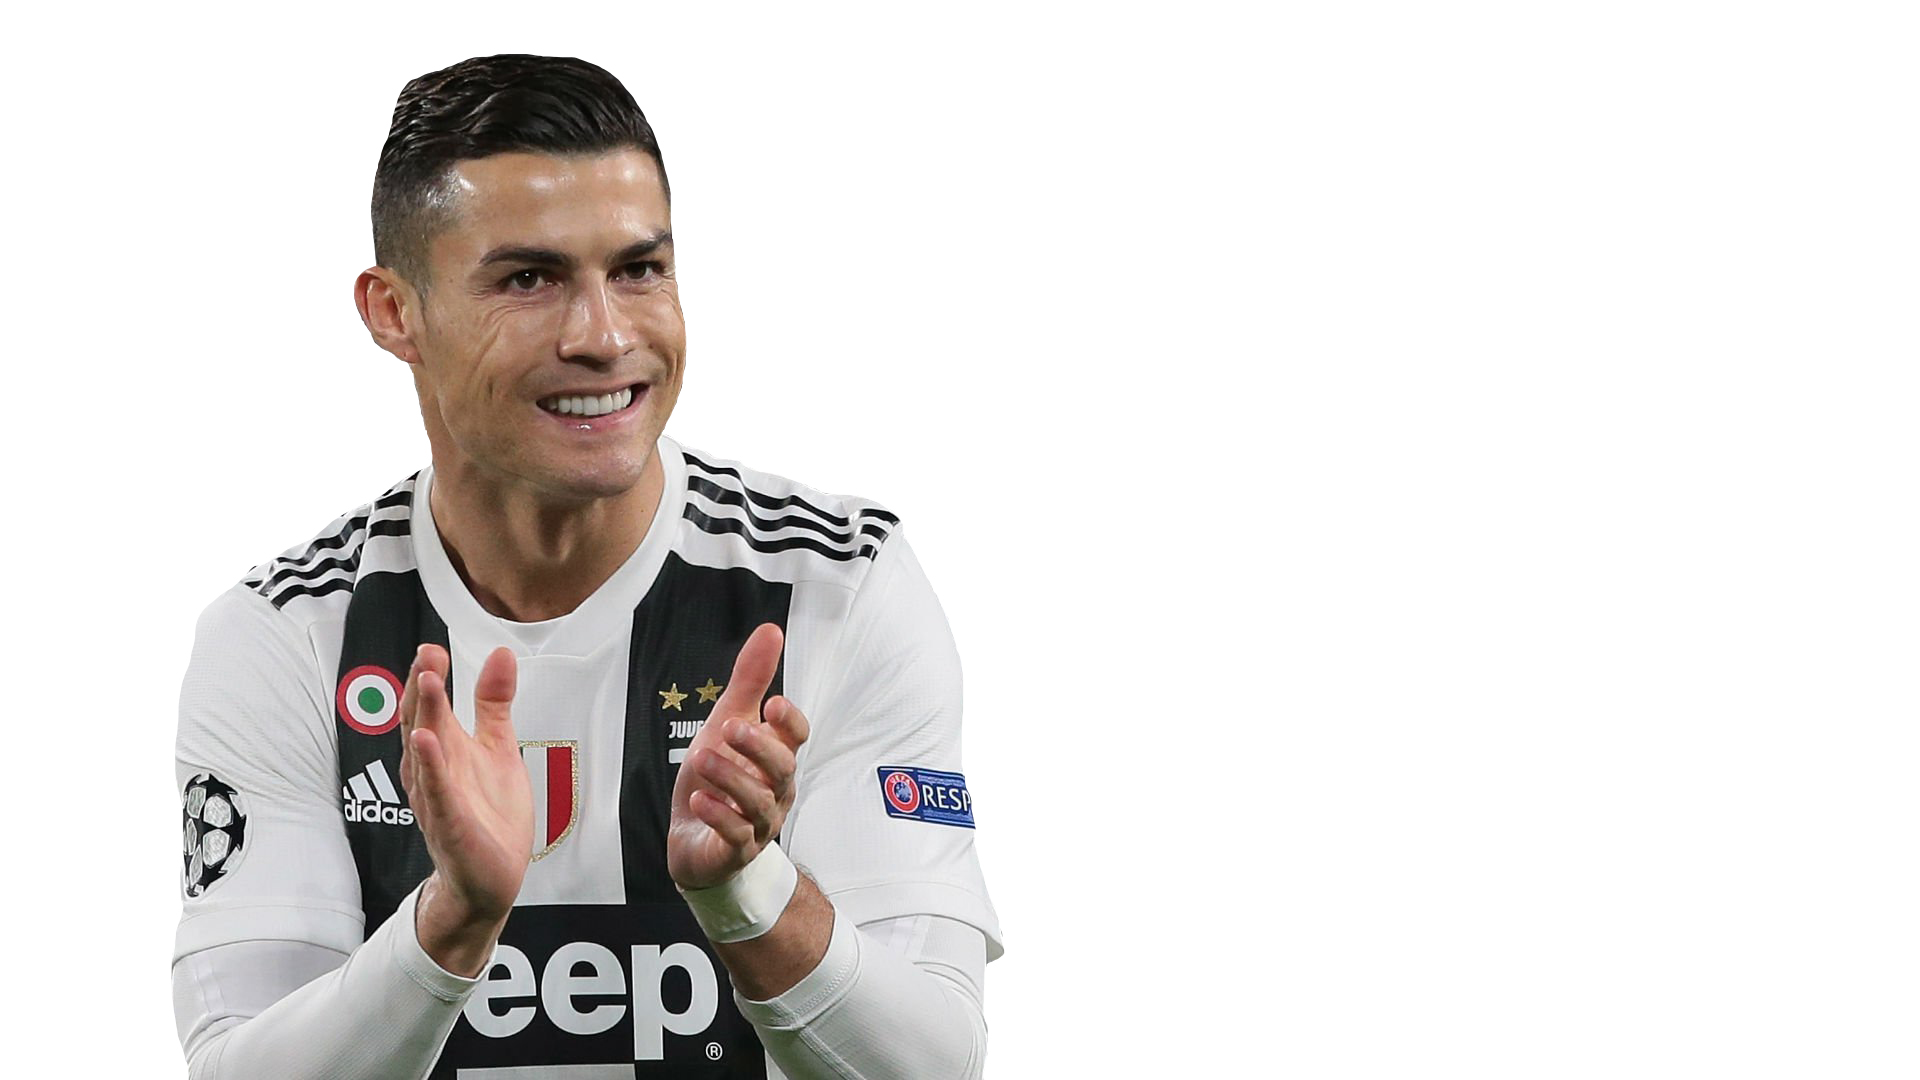 The Best Cristiano Ronaldo Wallpaper Photos HD Cr7